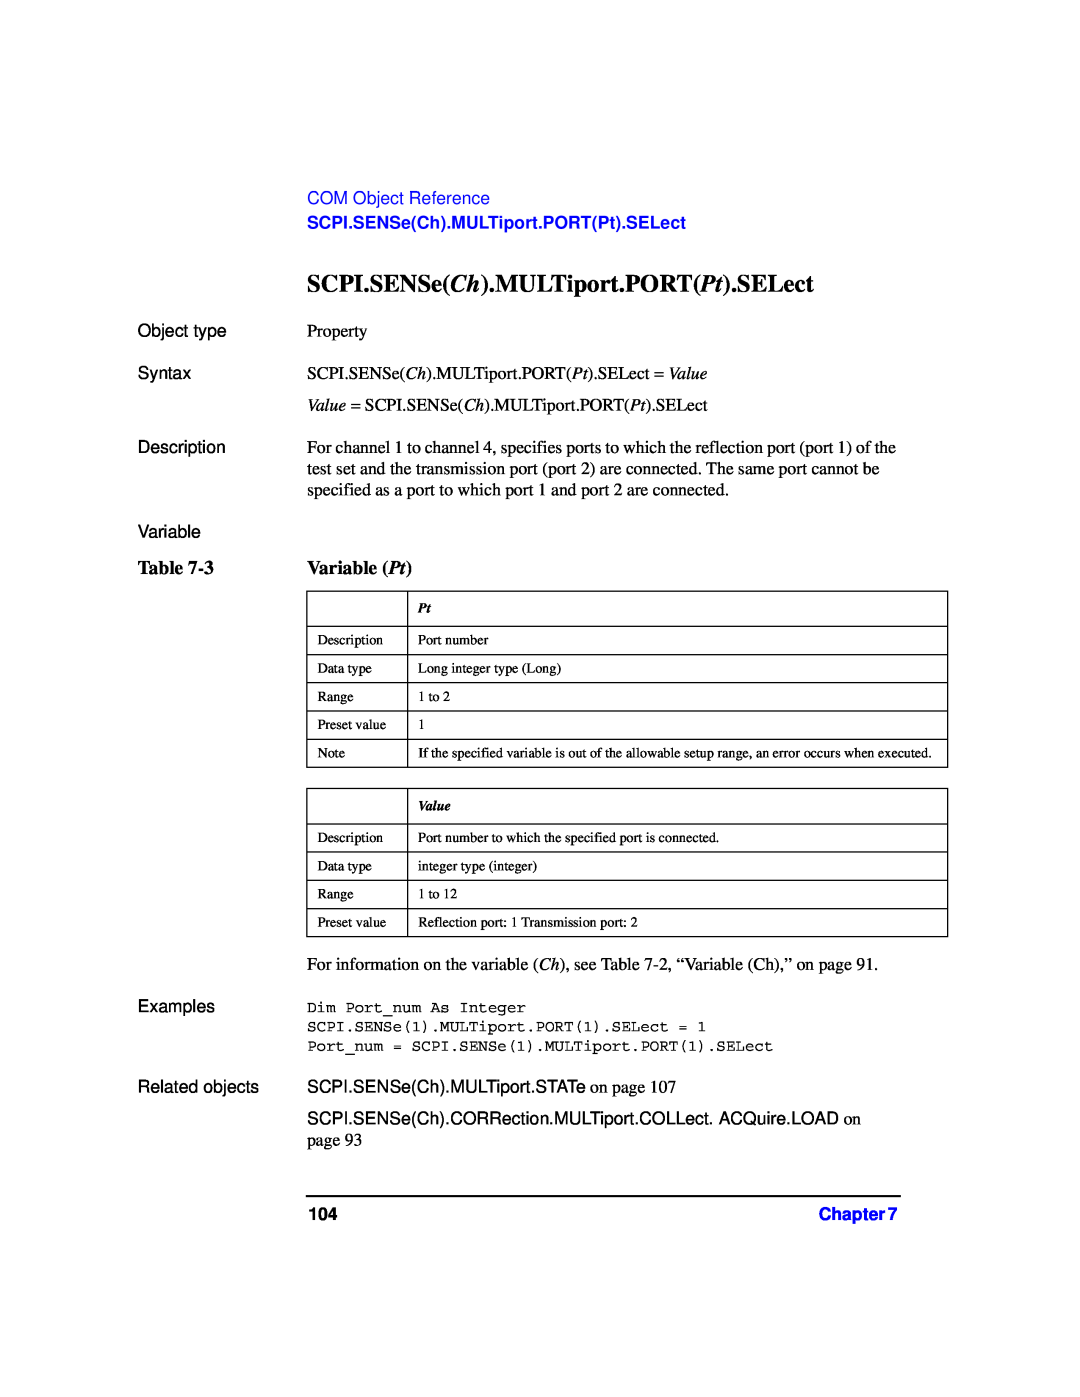 Agilent Technologies 87075C manual SCPI.SENSeCh.MULTiport.PORTPt.SELect, Variable Pt, COM Object Reference 